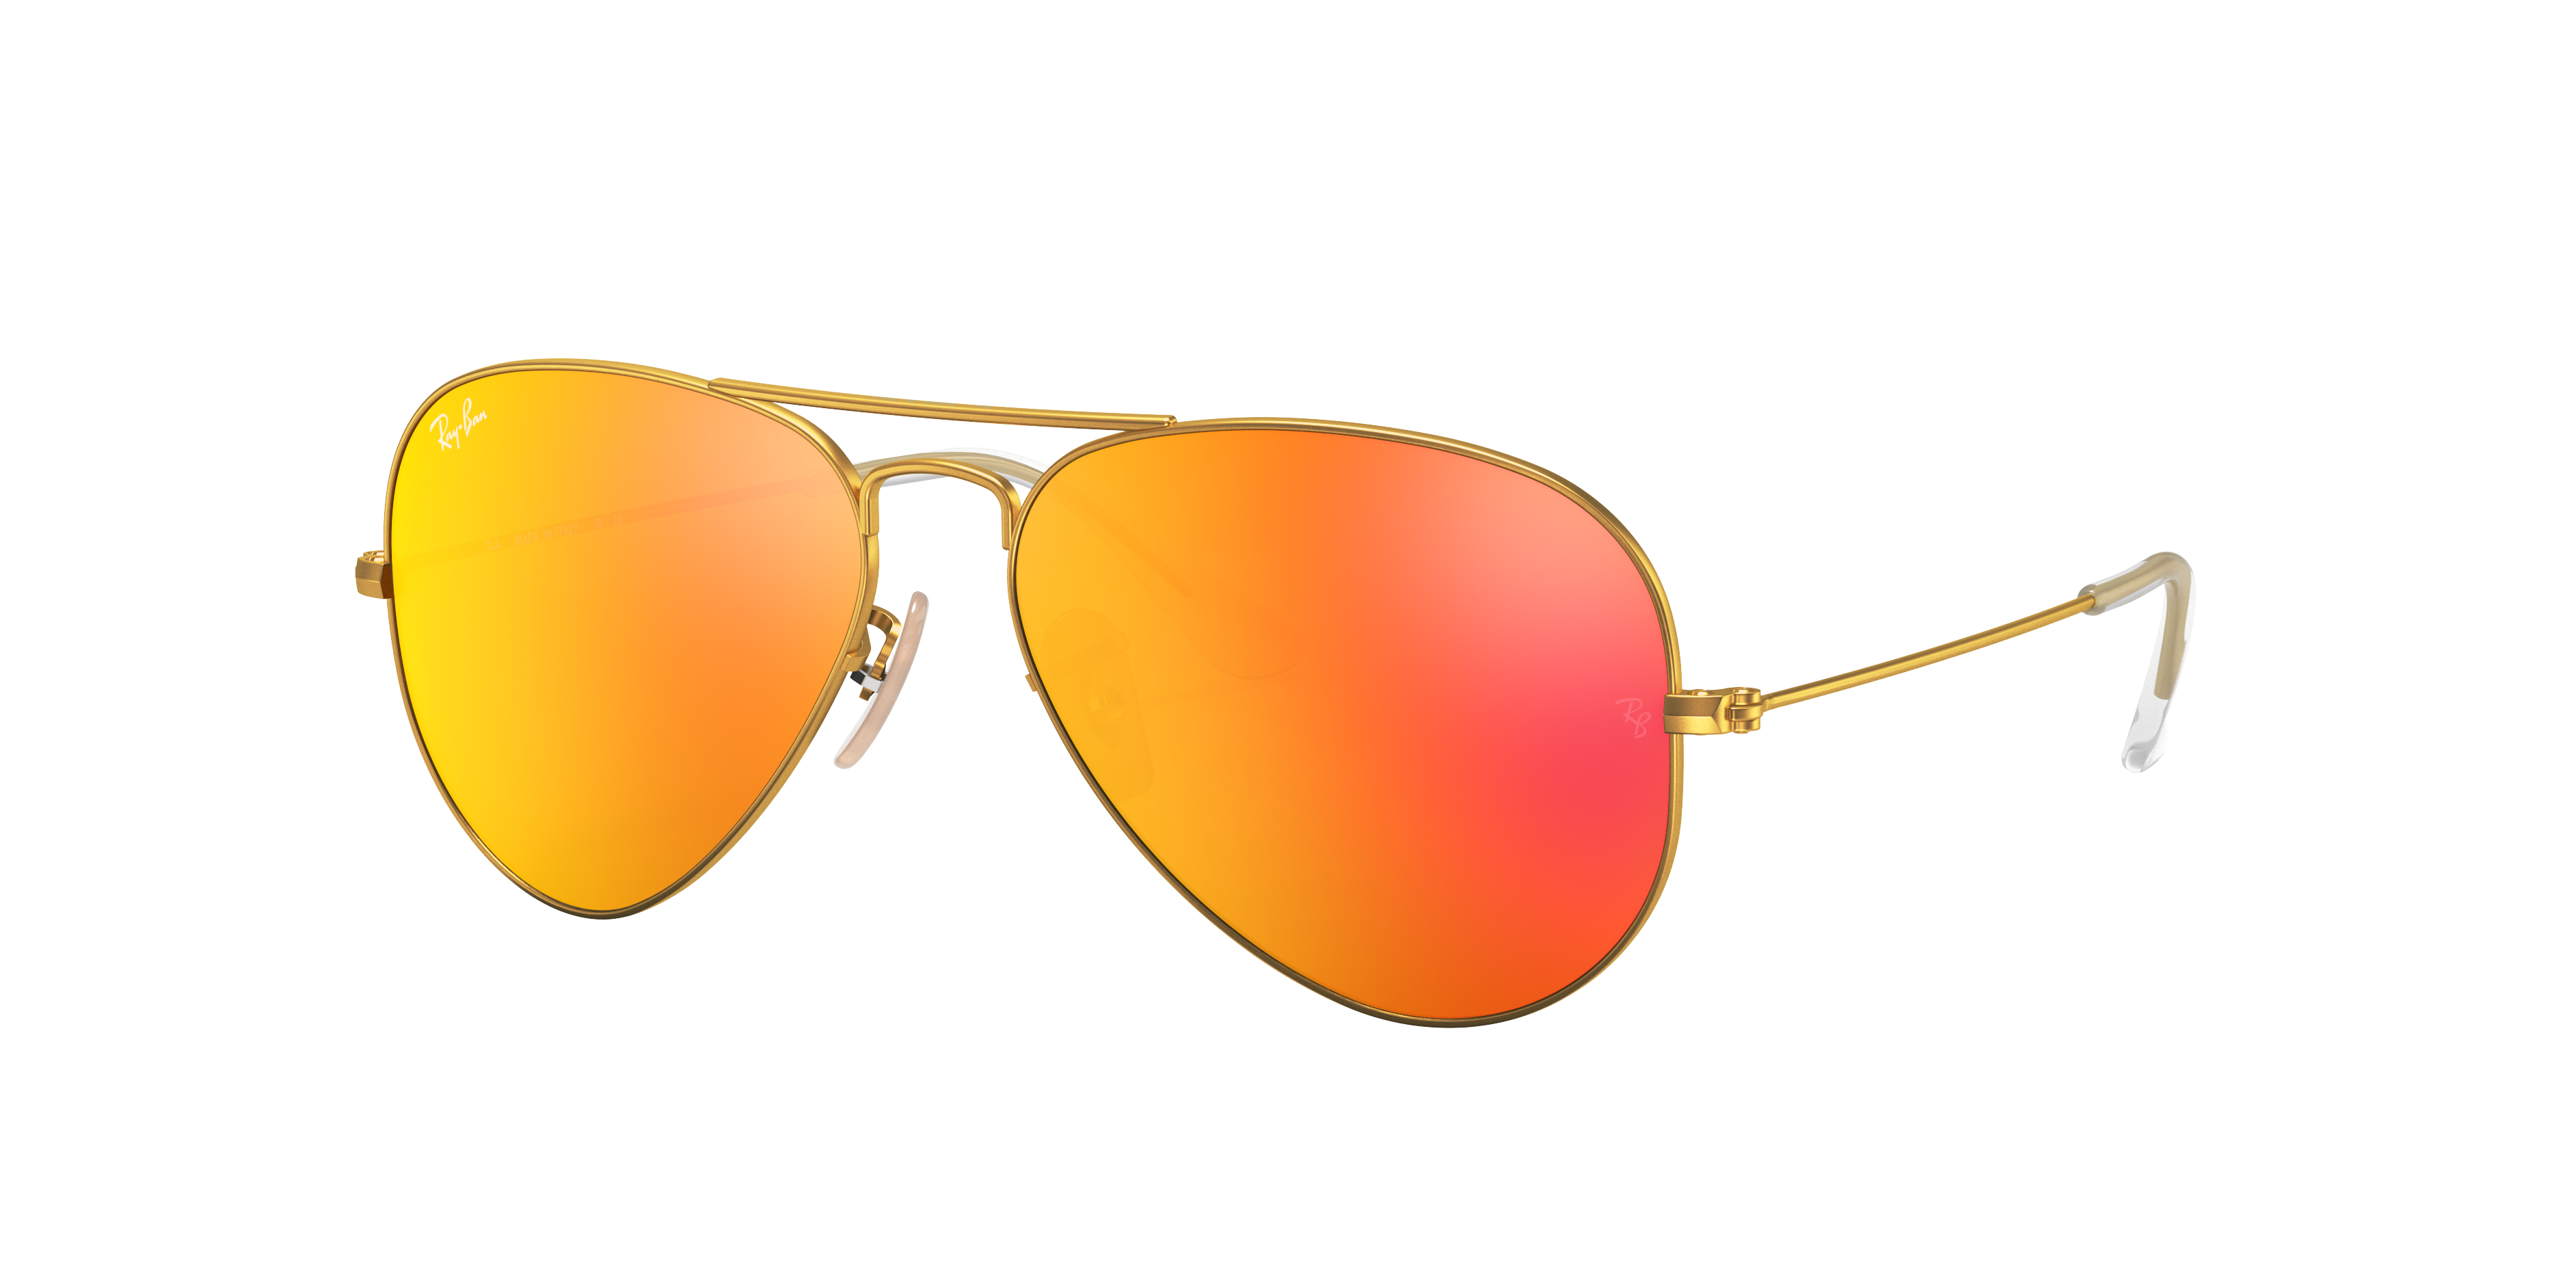 Gold Sunglasses in Orange and Aviator Flash Lenses | Ray-Ban®